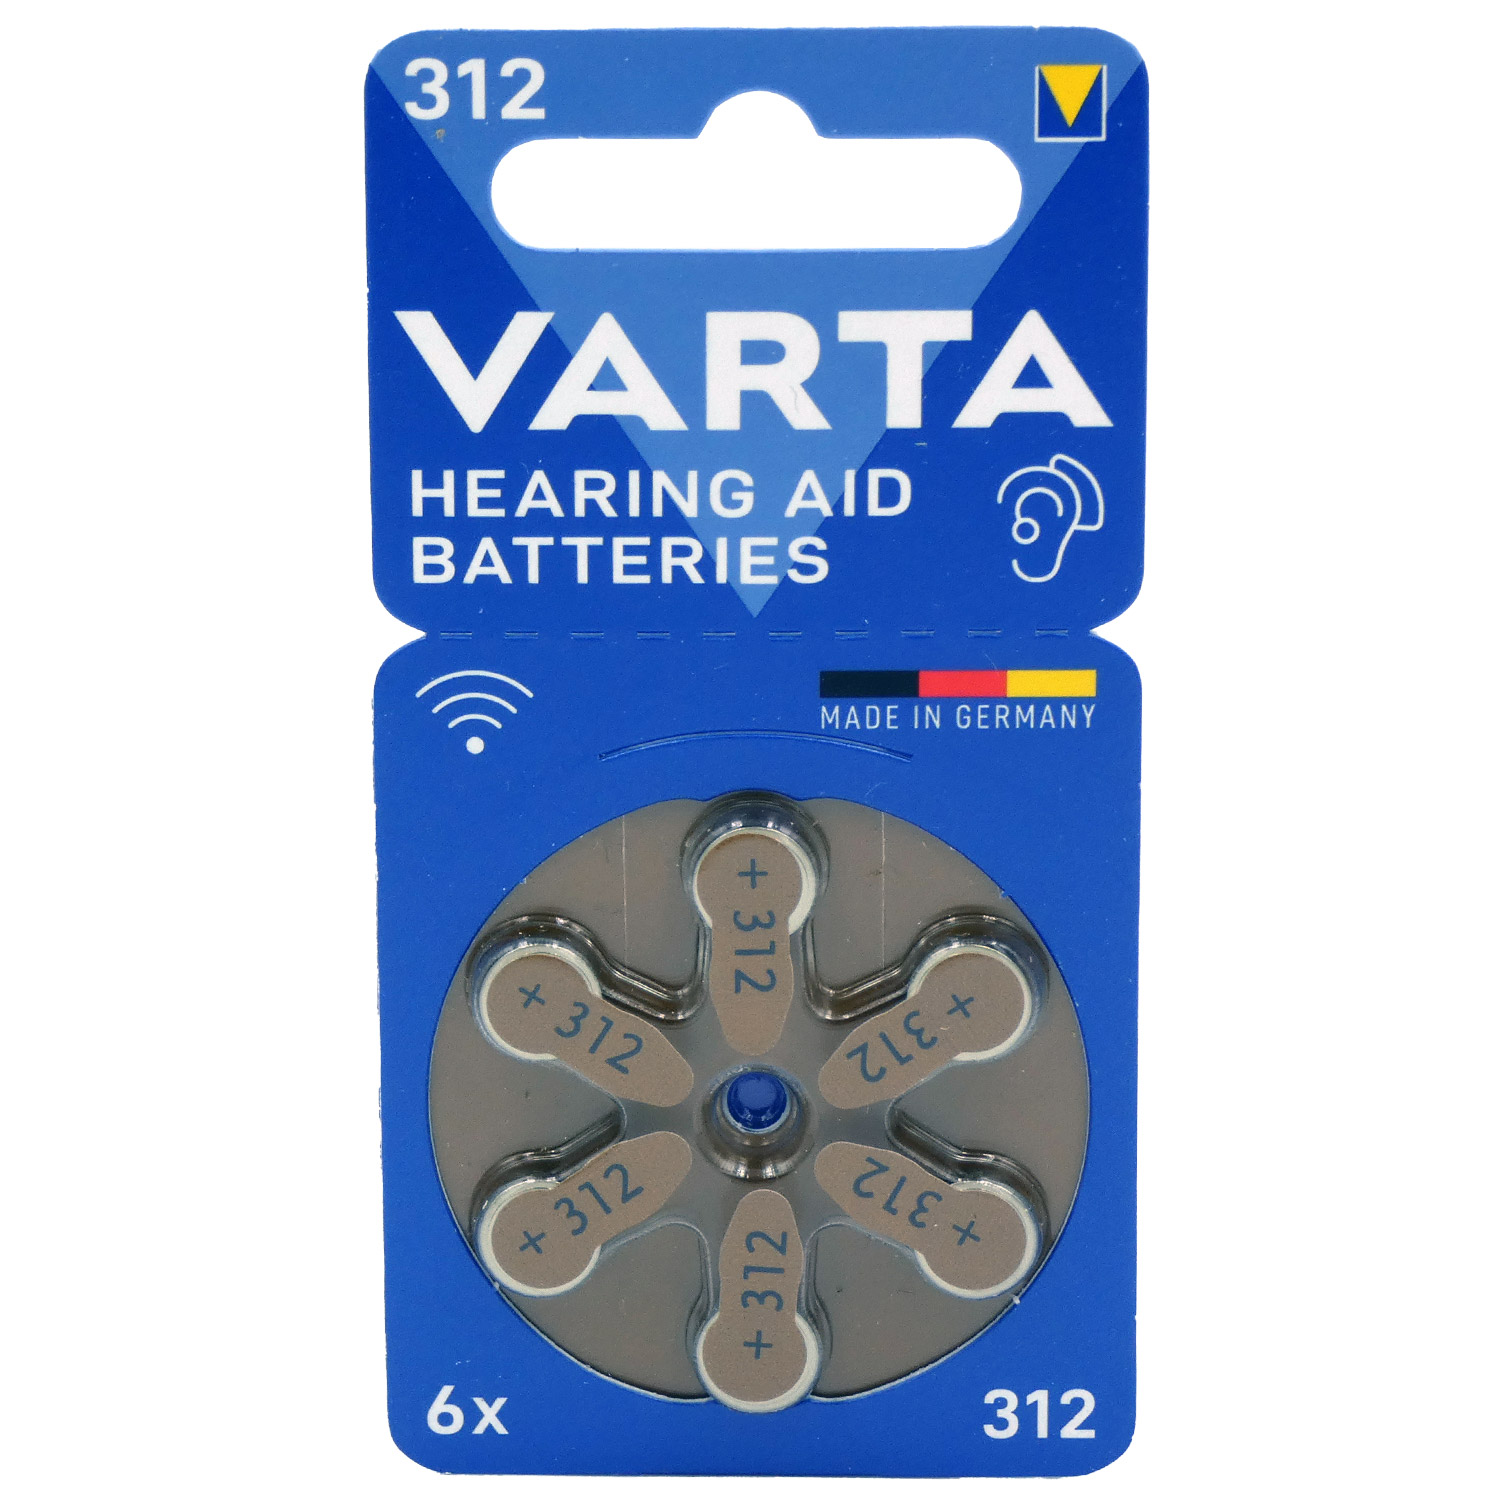 VARTA Hörgeräte-Batterien HA312 Acoustic Special vom Typ 312 (im 6er Pack)